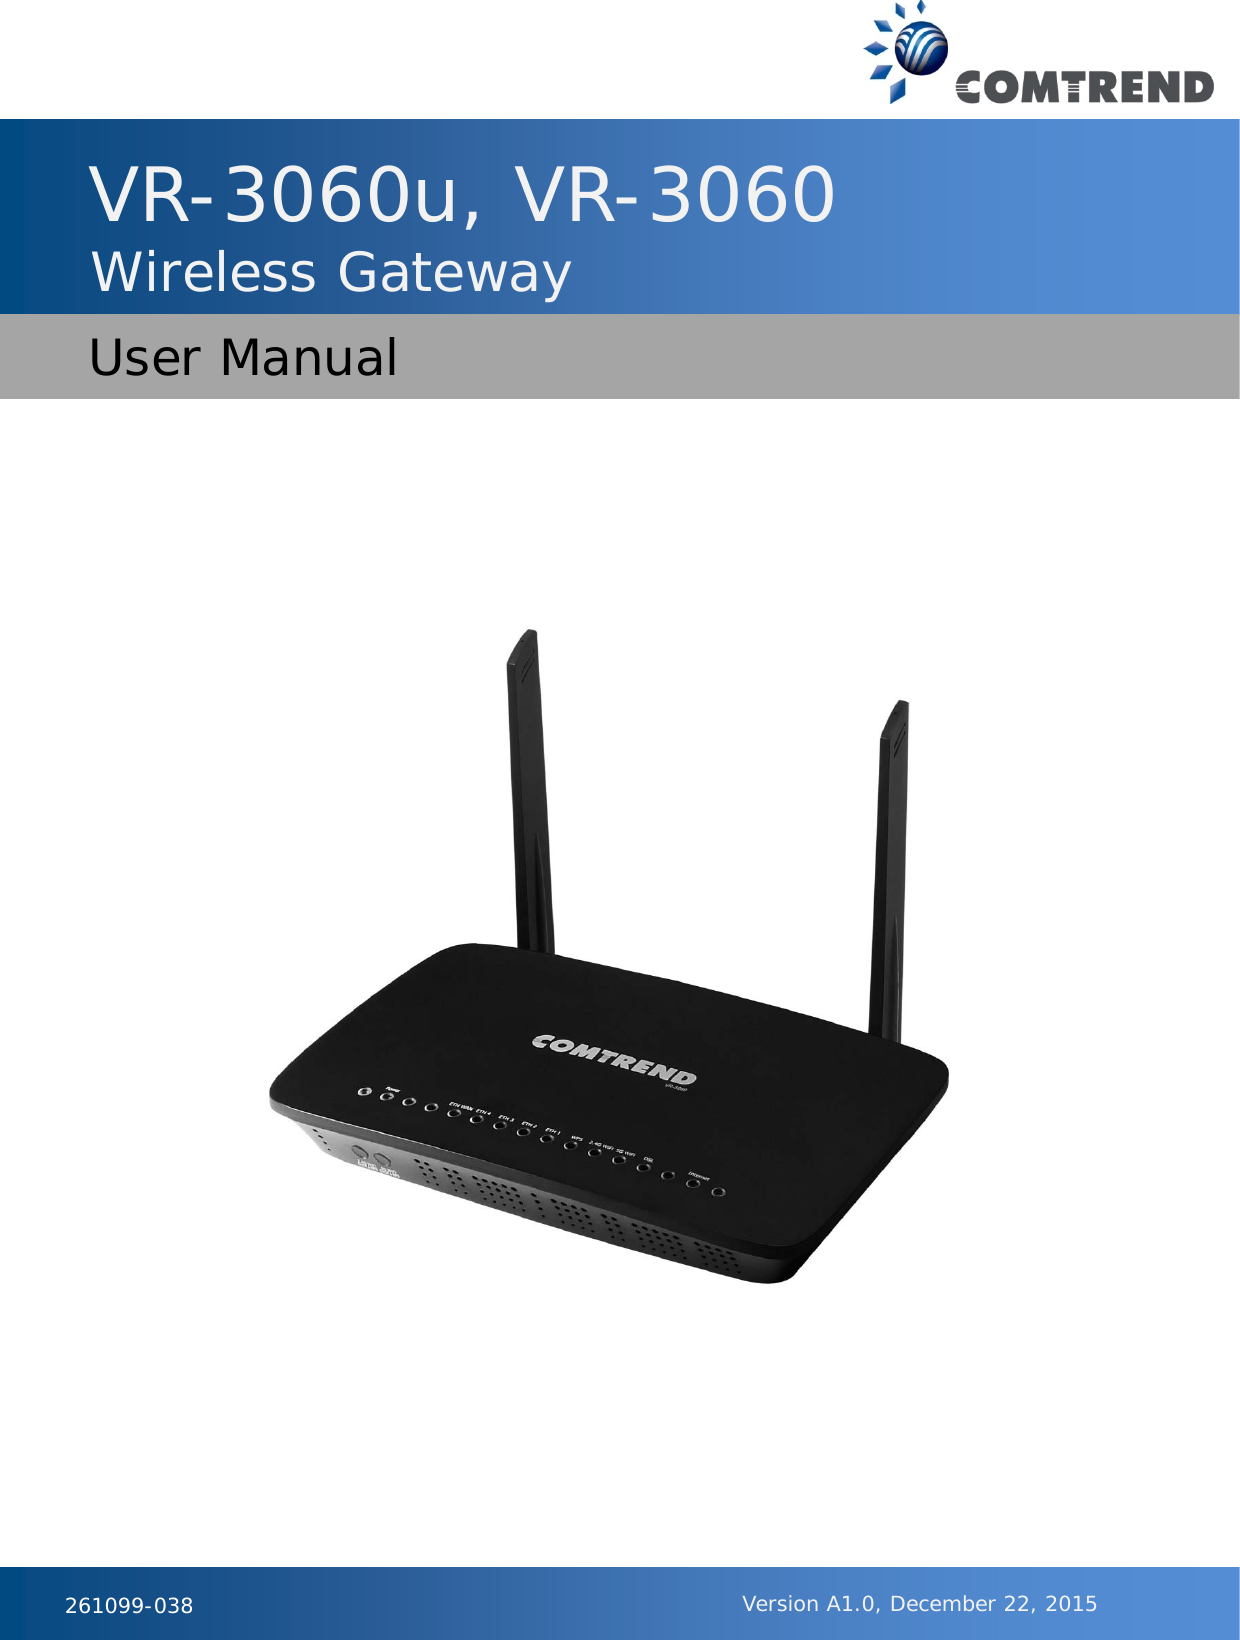   261099-038                VR-3060u, VR-3060 Wireless Gateway User Manual Version A1.0, December 22, 2015 